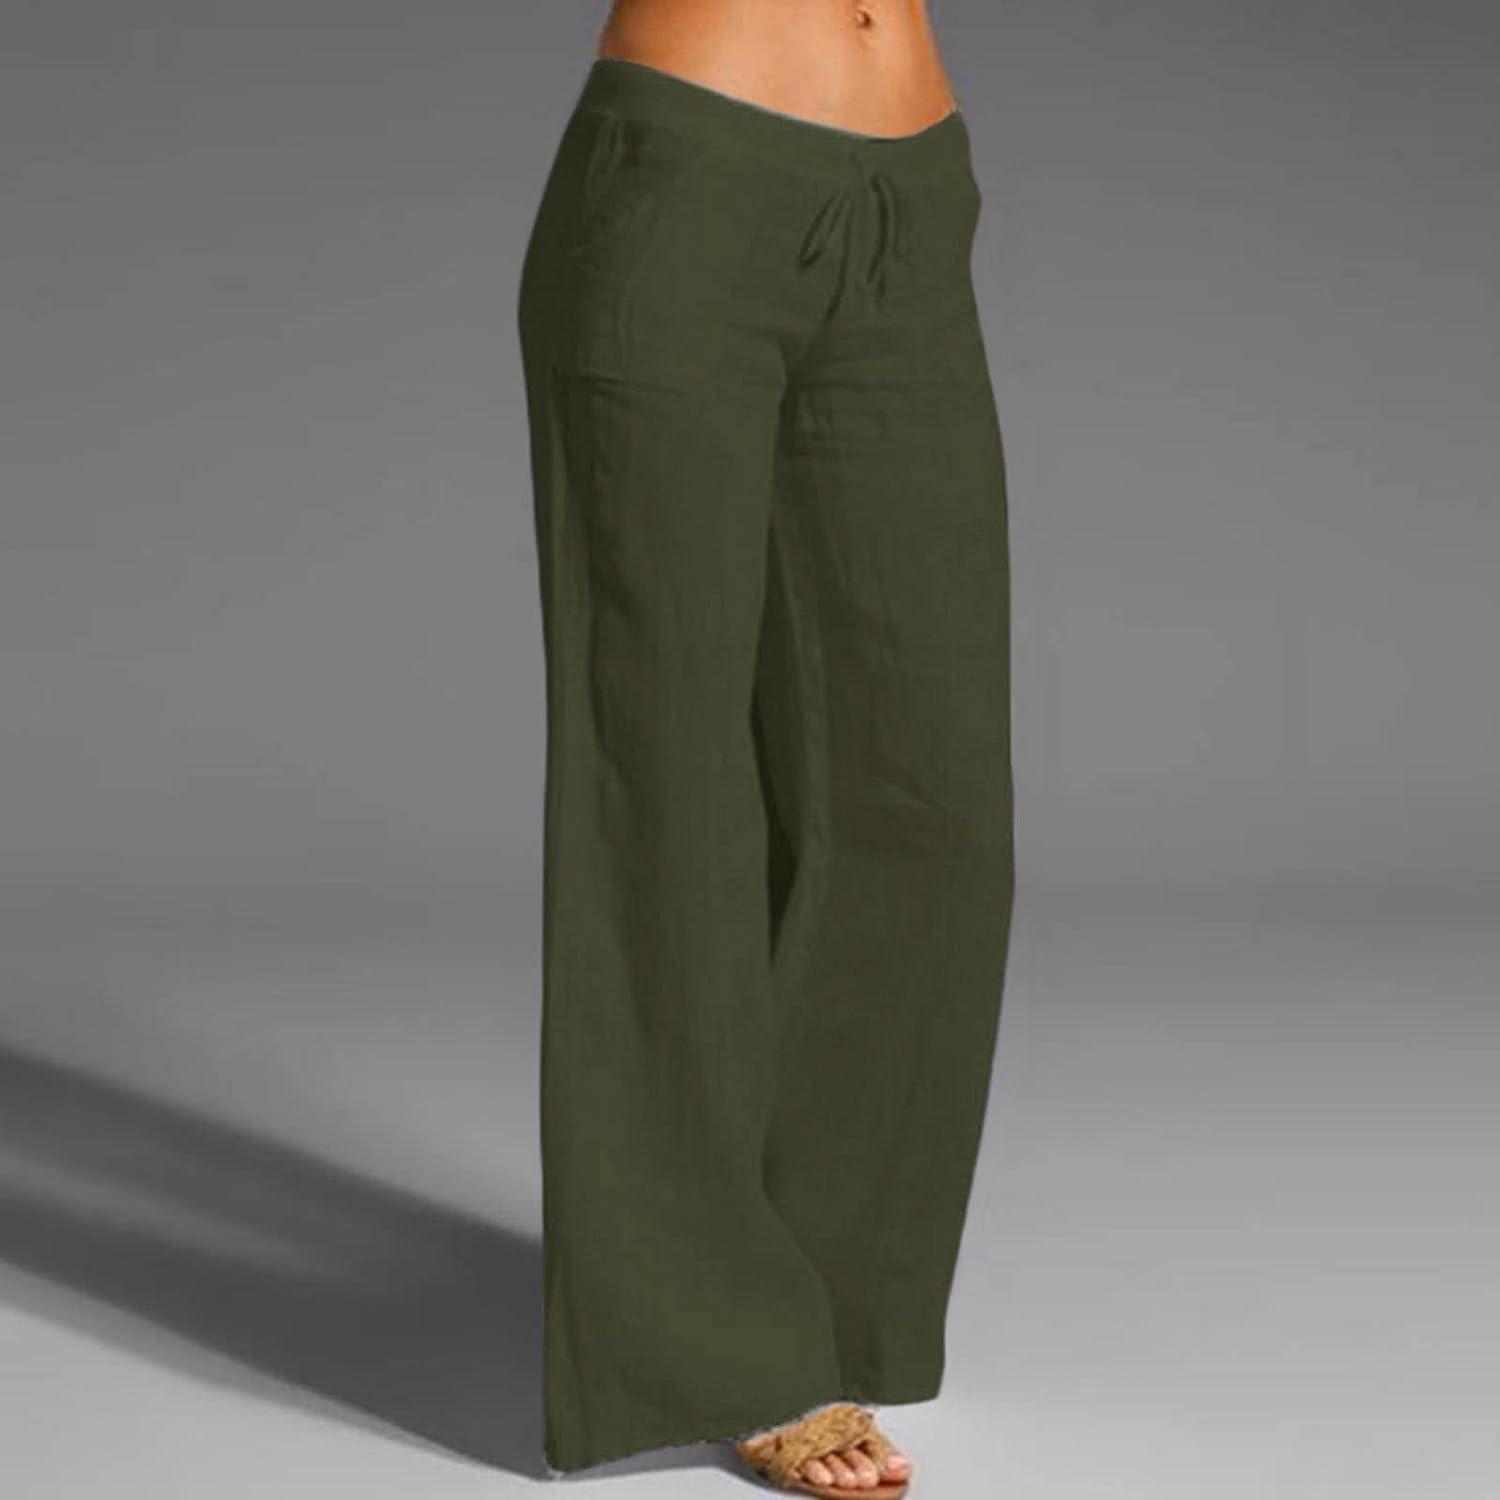 DAZLOR Linen Pants for Women Petite to Plus Size High Waist Drawstring  Beach Pants Loose Fit Casual Summer Wide Leg Trousers 04-green X-Large